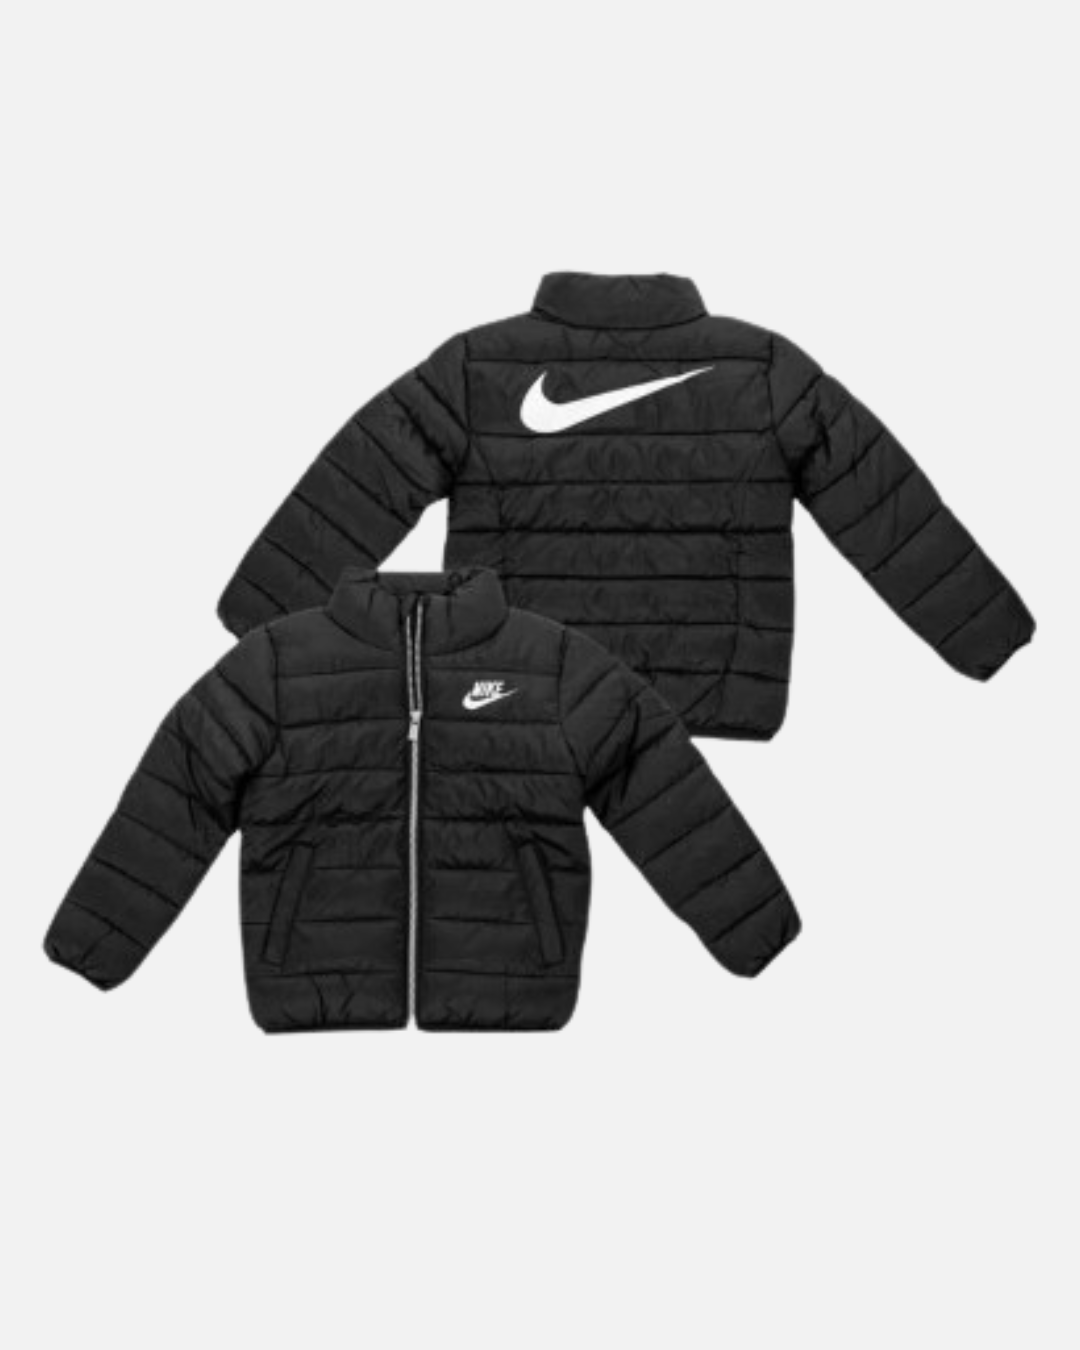 Nike Junior Jacket - Black